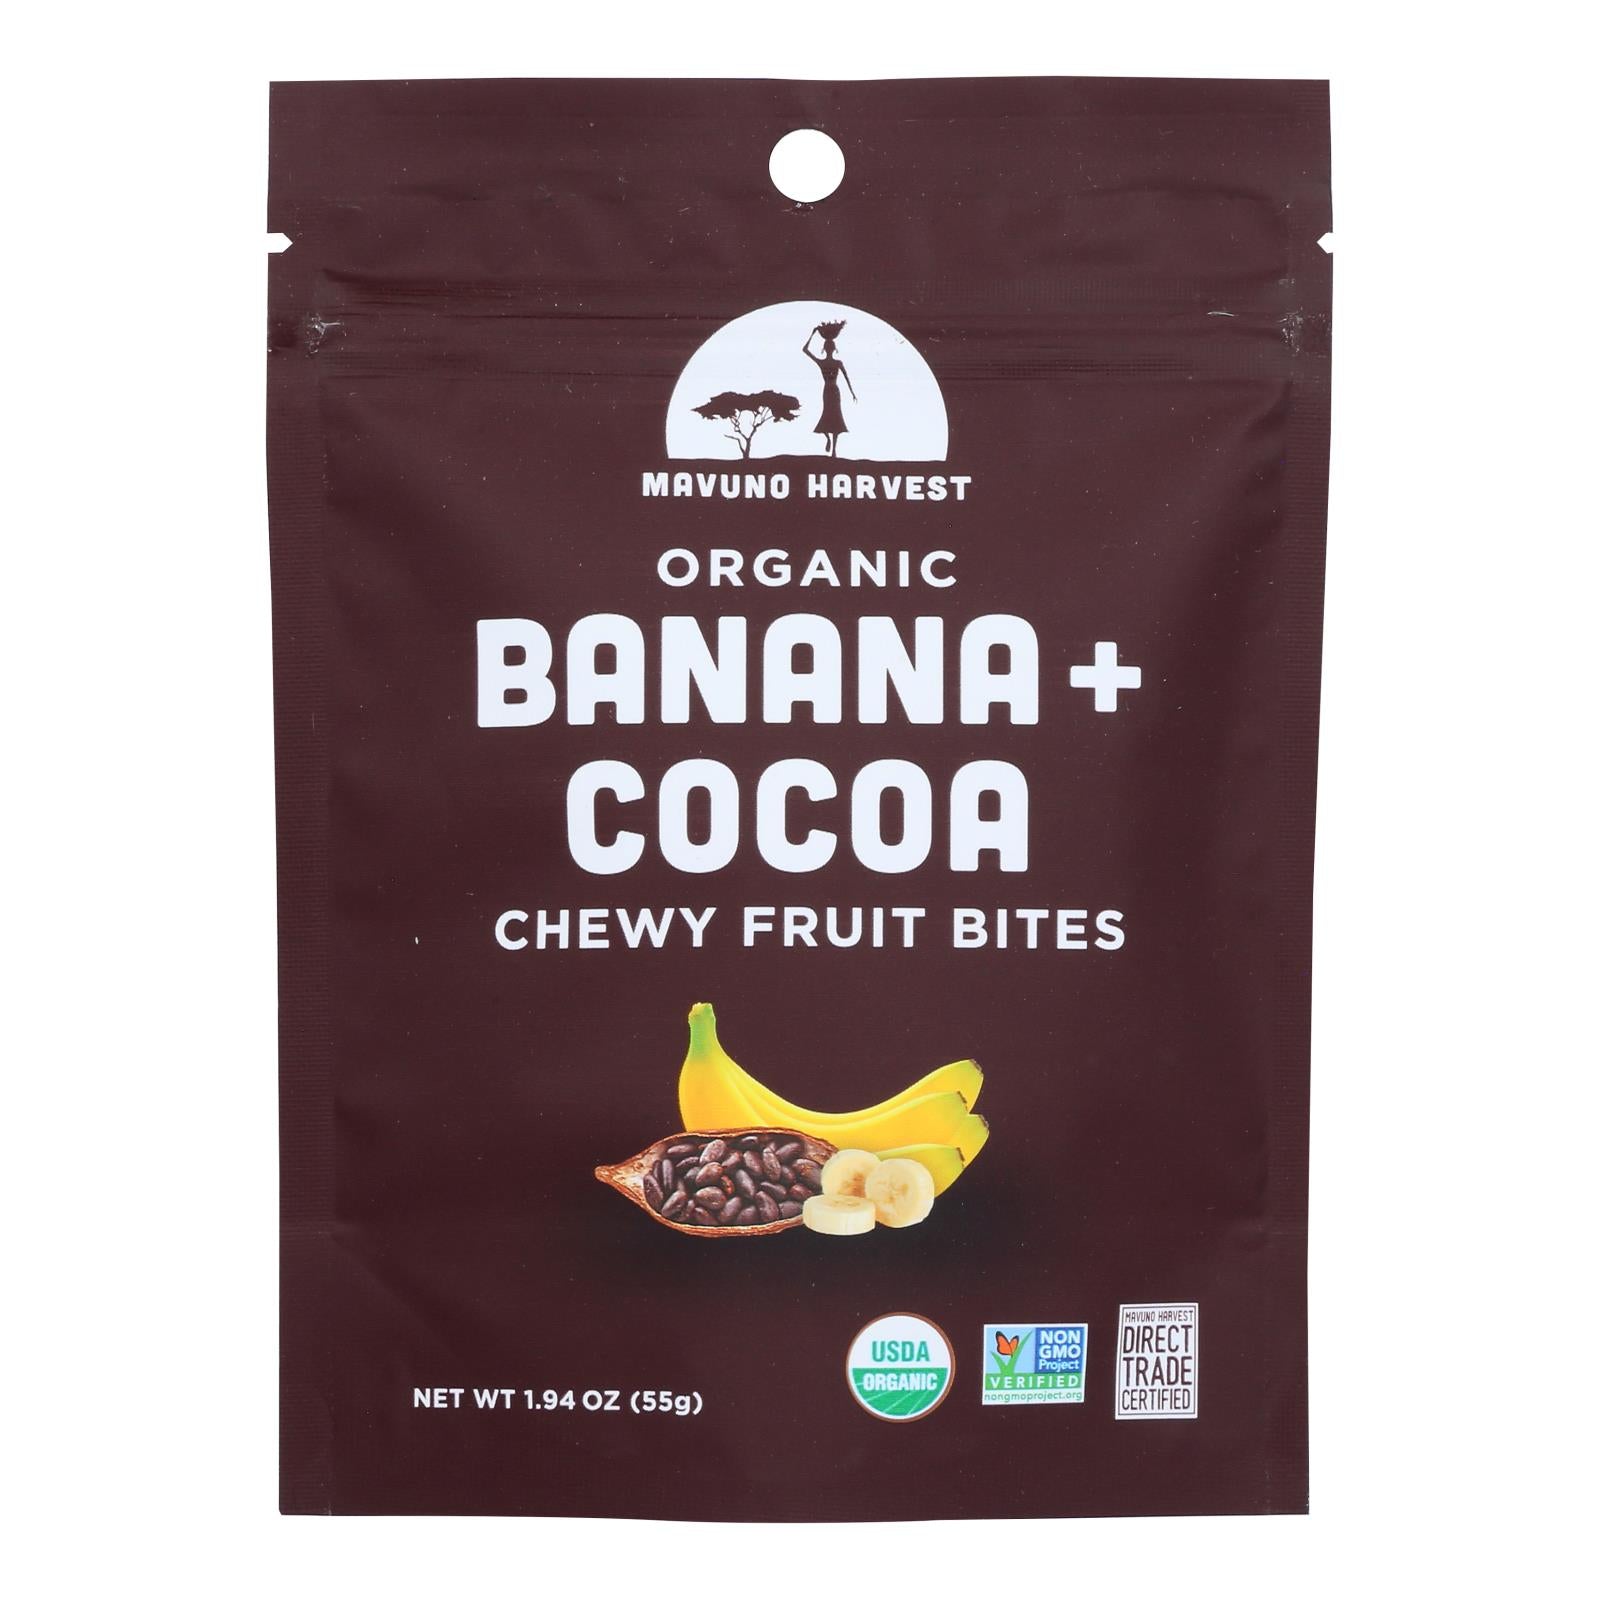 Mavuno Harvest - Frt/bts Bnana Cocoa - Case Of 8-1.94 Oz